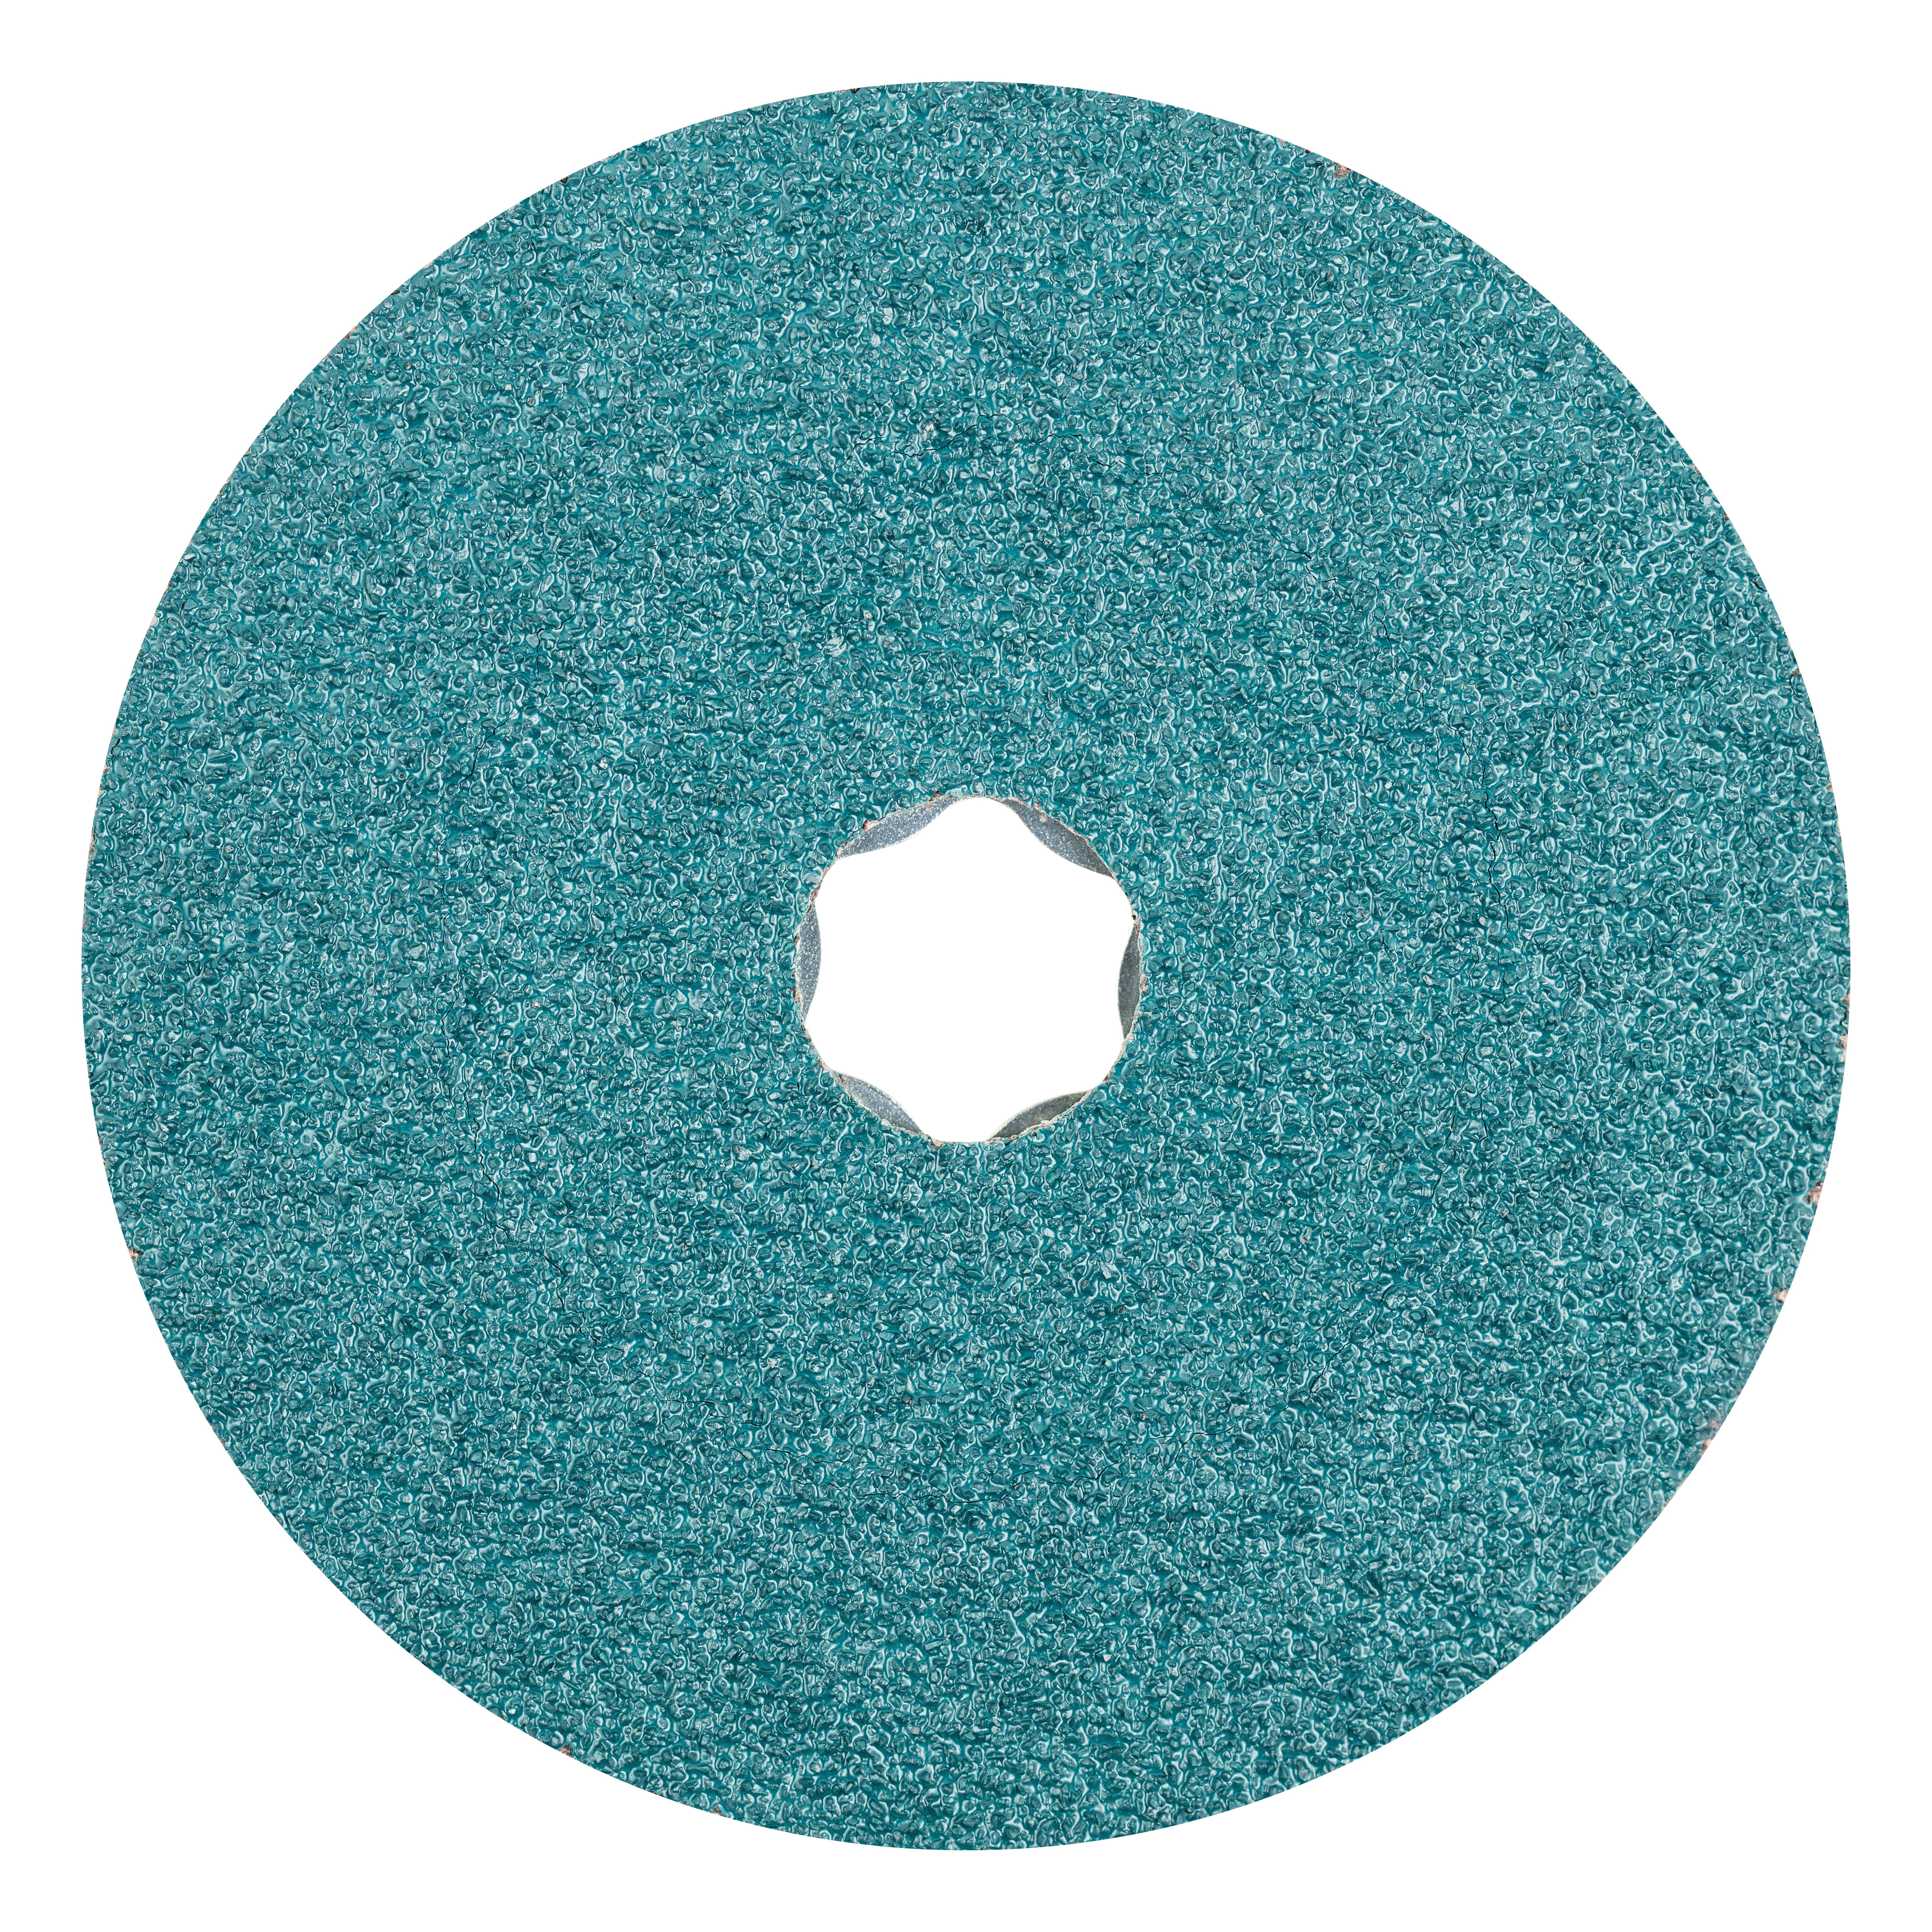 PFERD COMBICLICK® 40131 Coated Abrasive Disc, 4-1/2 in Dia, 36 Grit, Zirconia Alumina Abrasive